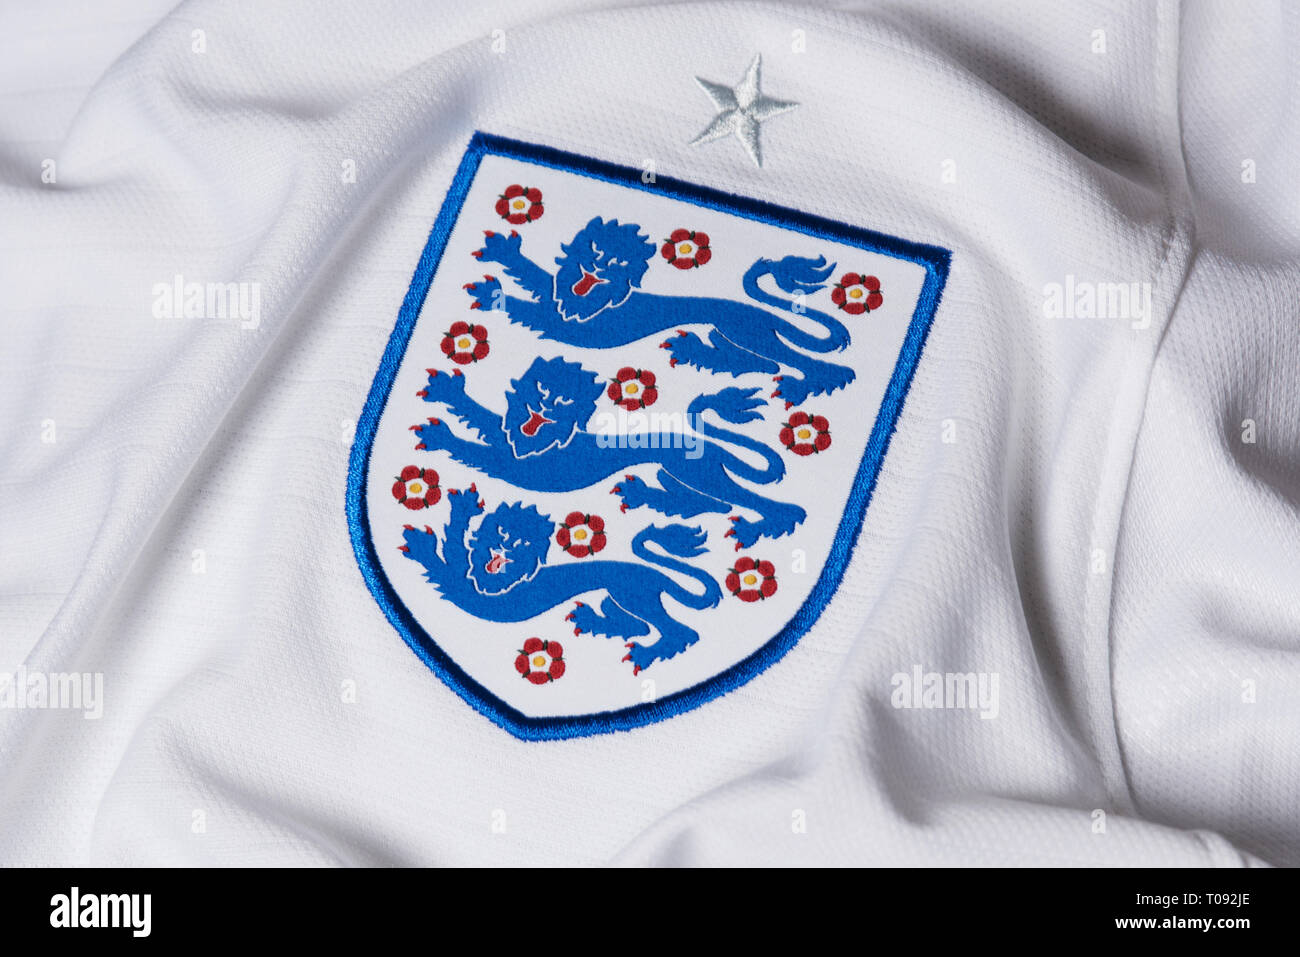 Close up of England National Football team kit. Stock Photo